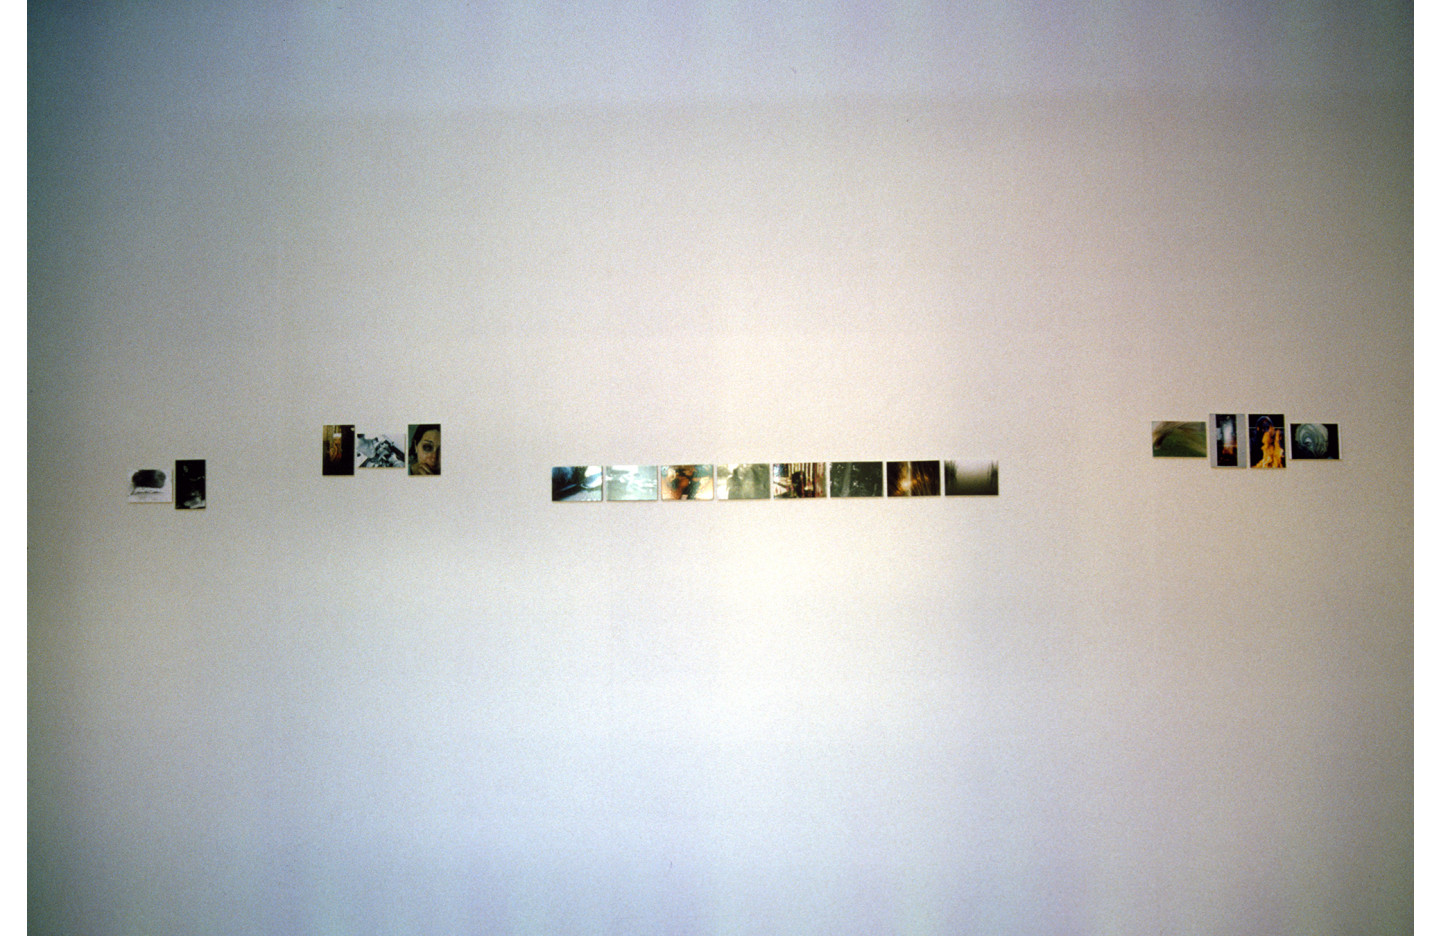 Post, Ramp Gallery (2001)